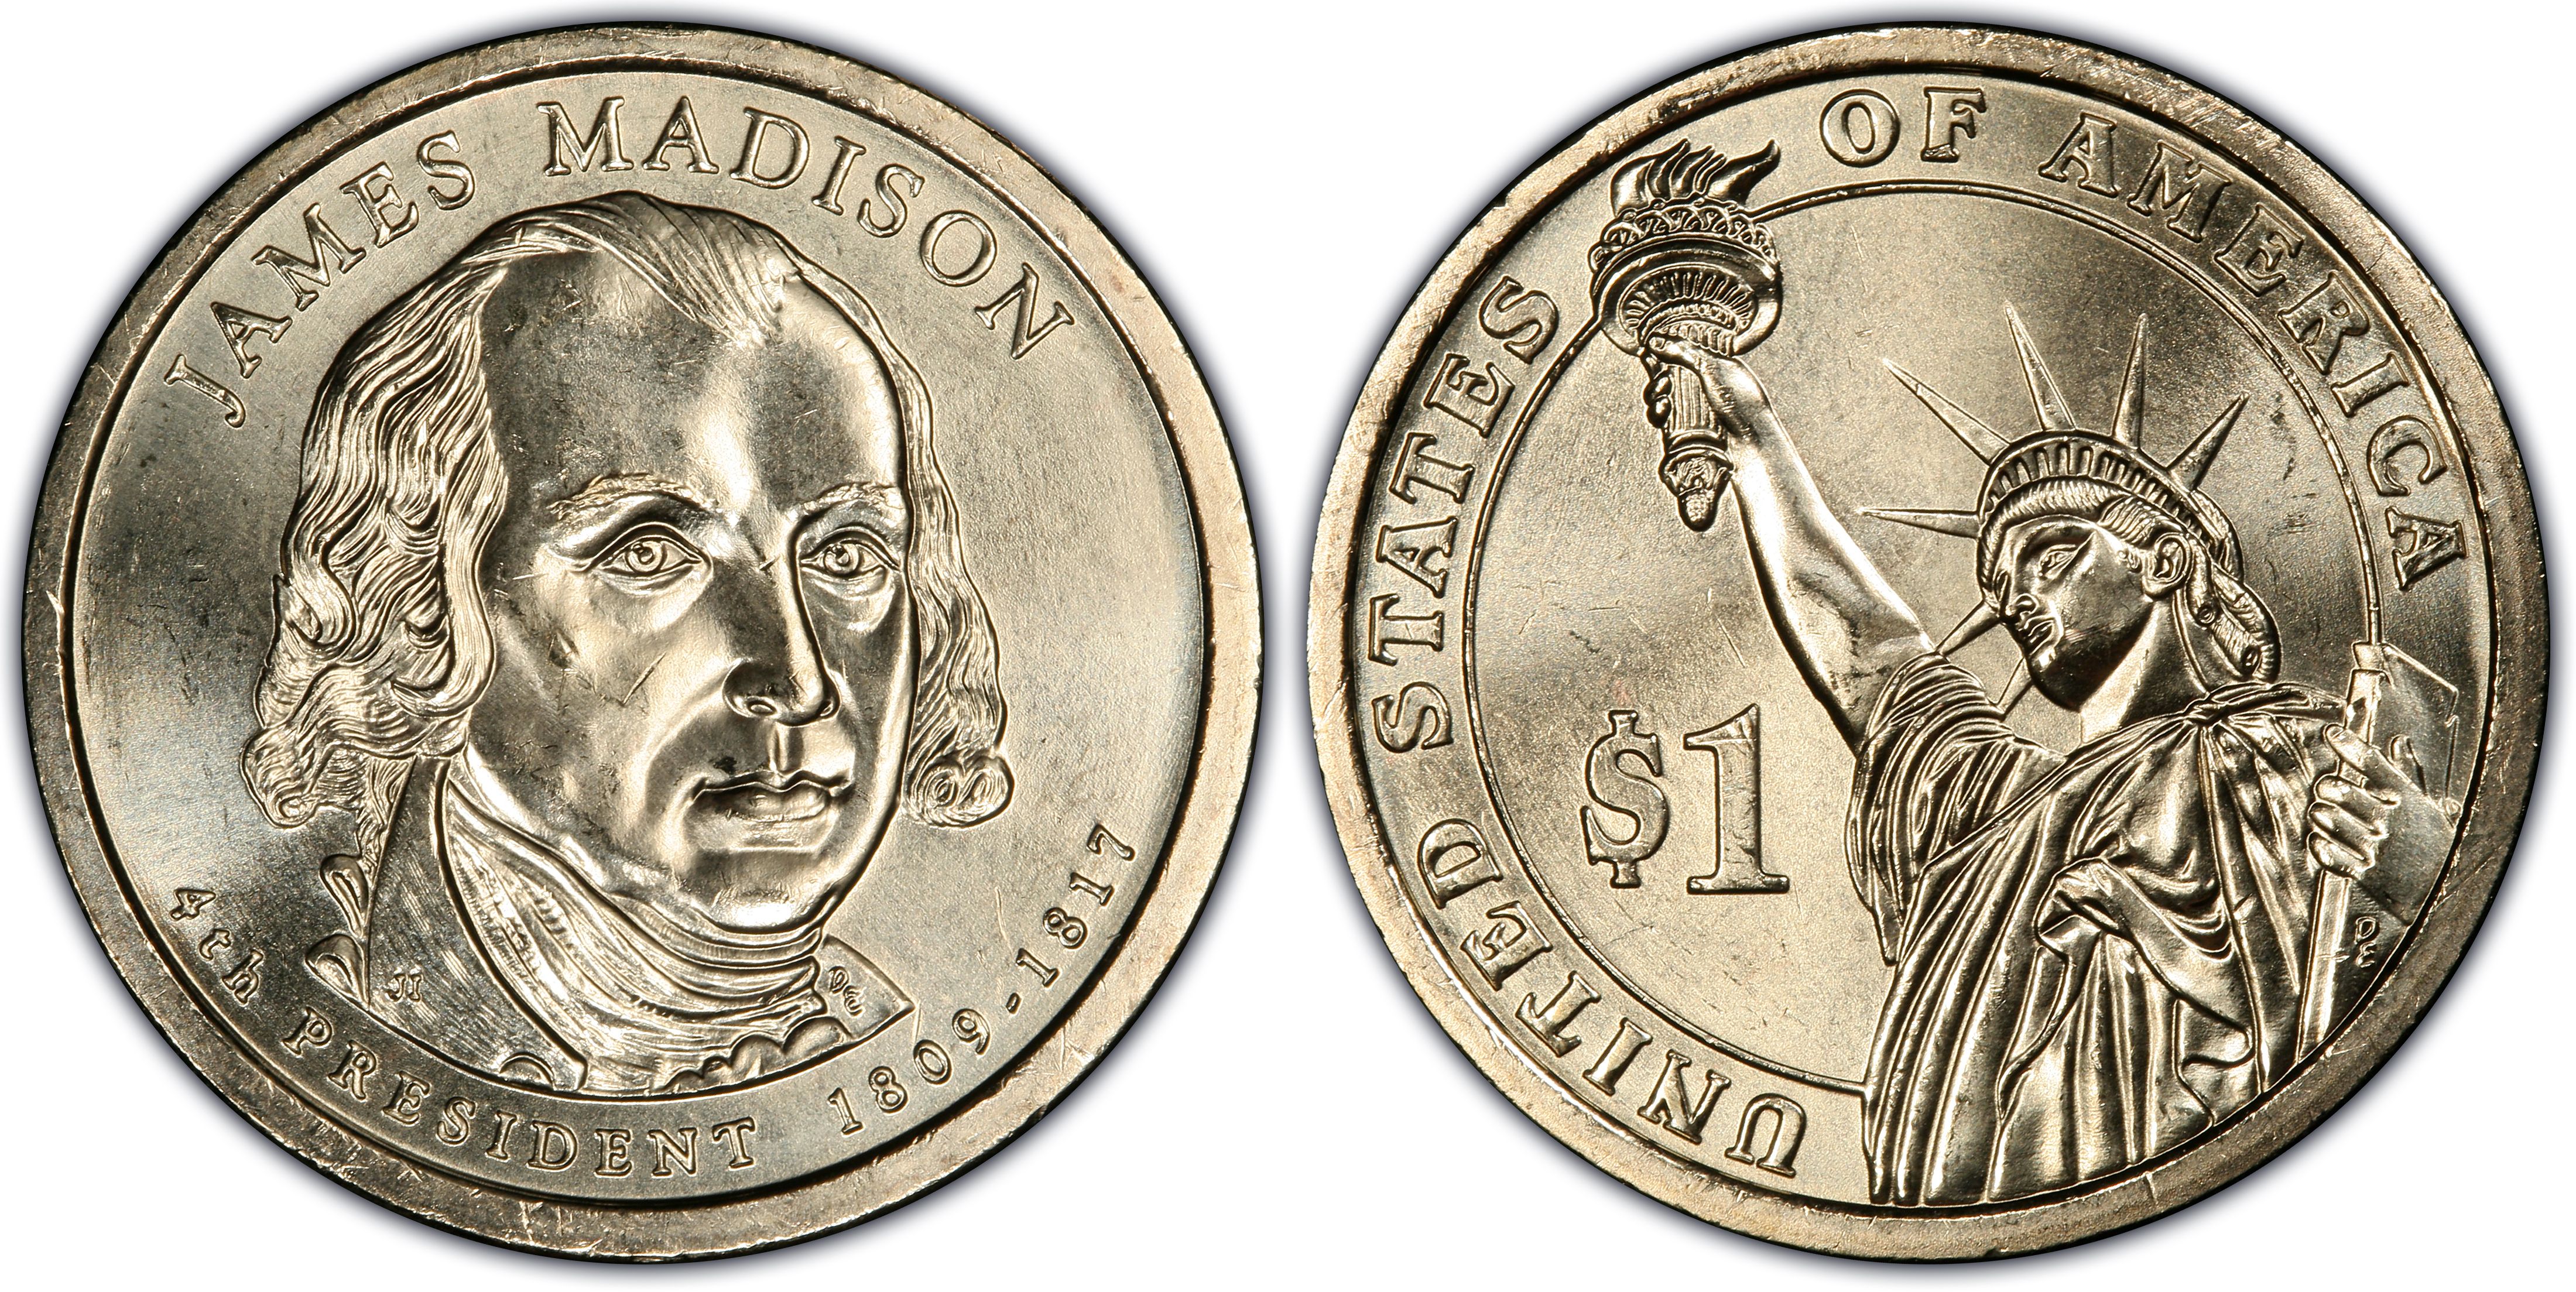 2007-D James Madison Presidential Dollar Coin $1 Roll $25 FV  BU UNC MS 